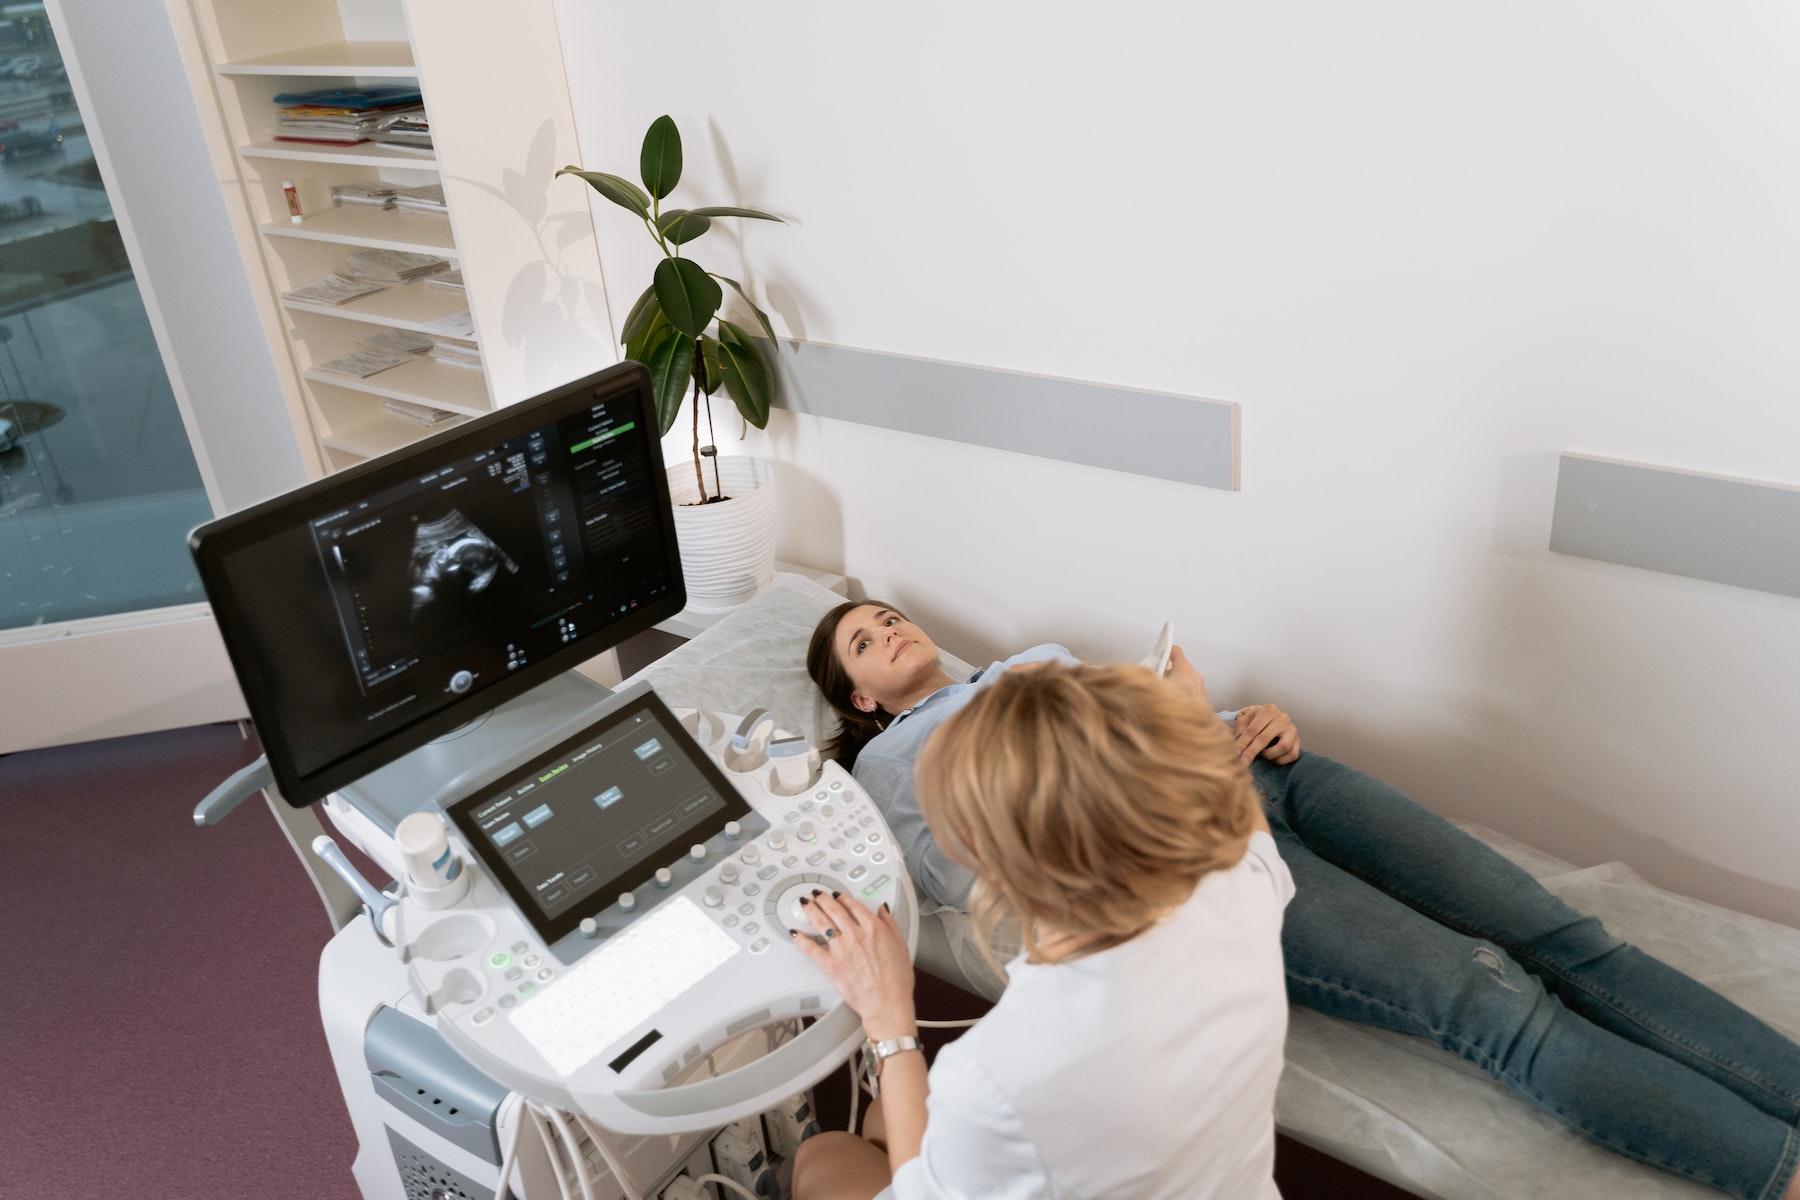 Pregnant woman receiving ultrasound